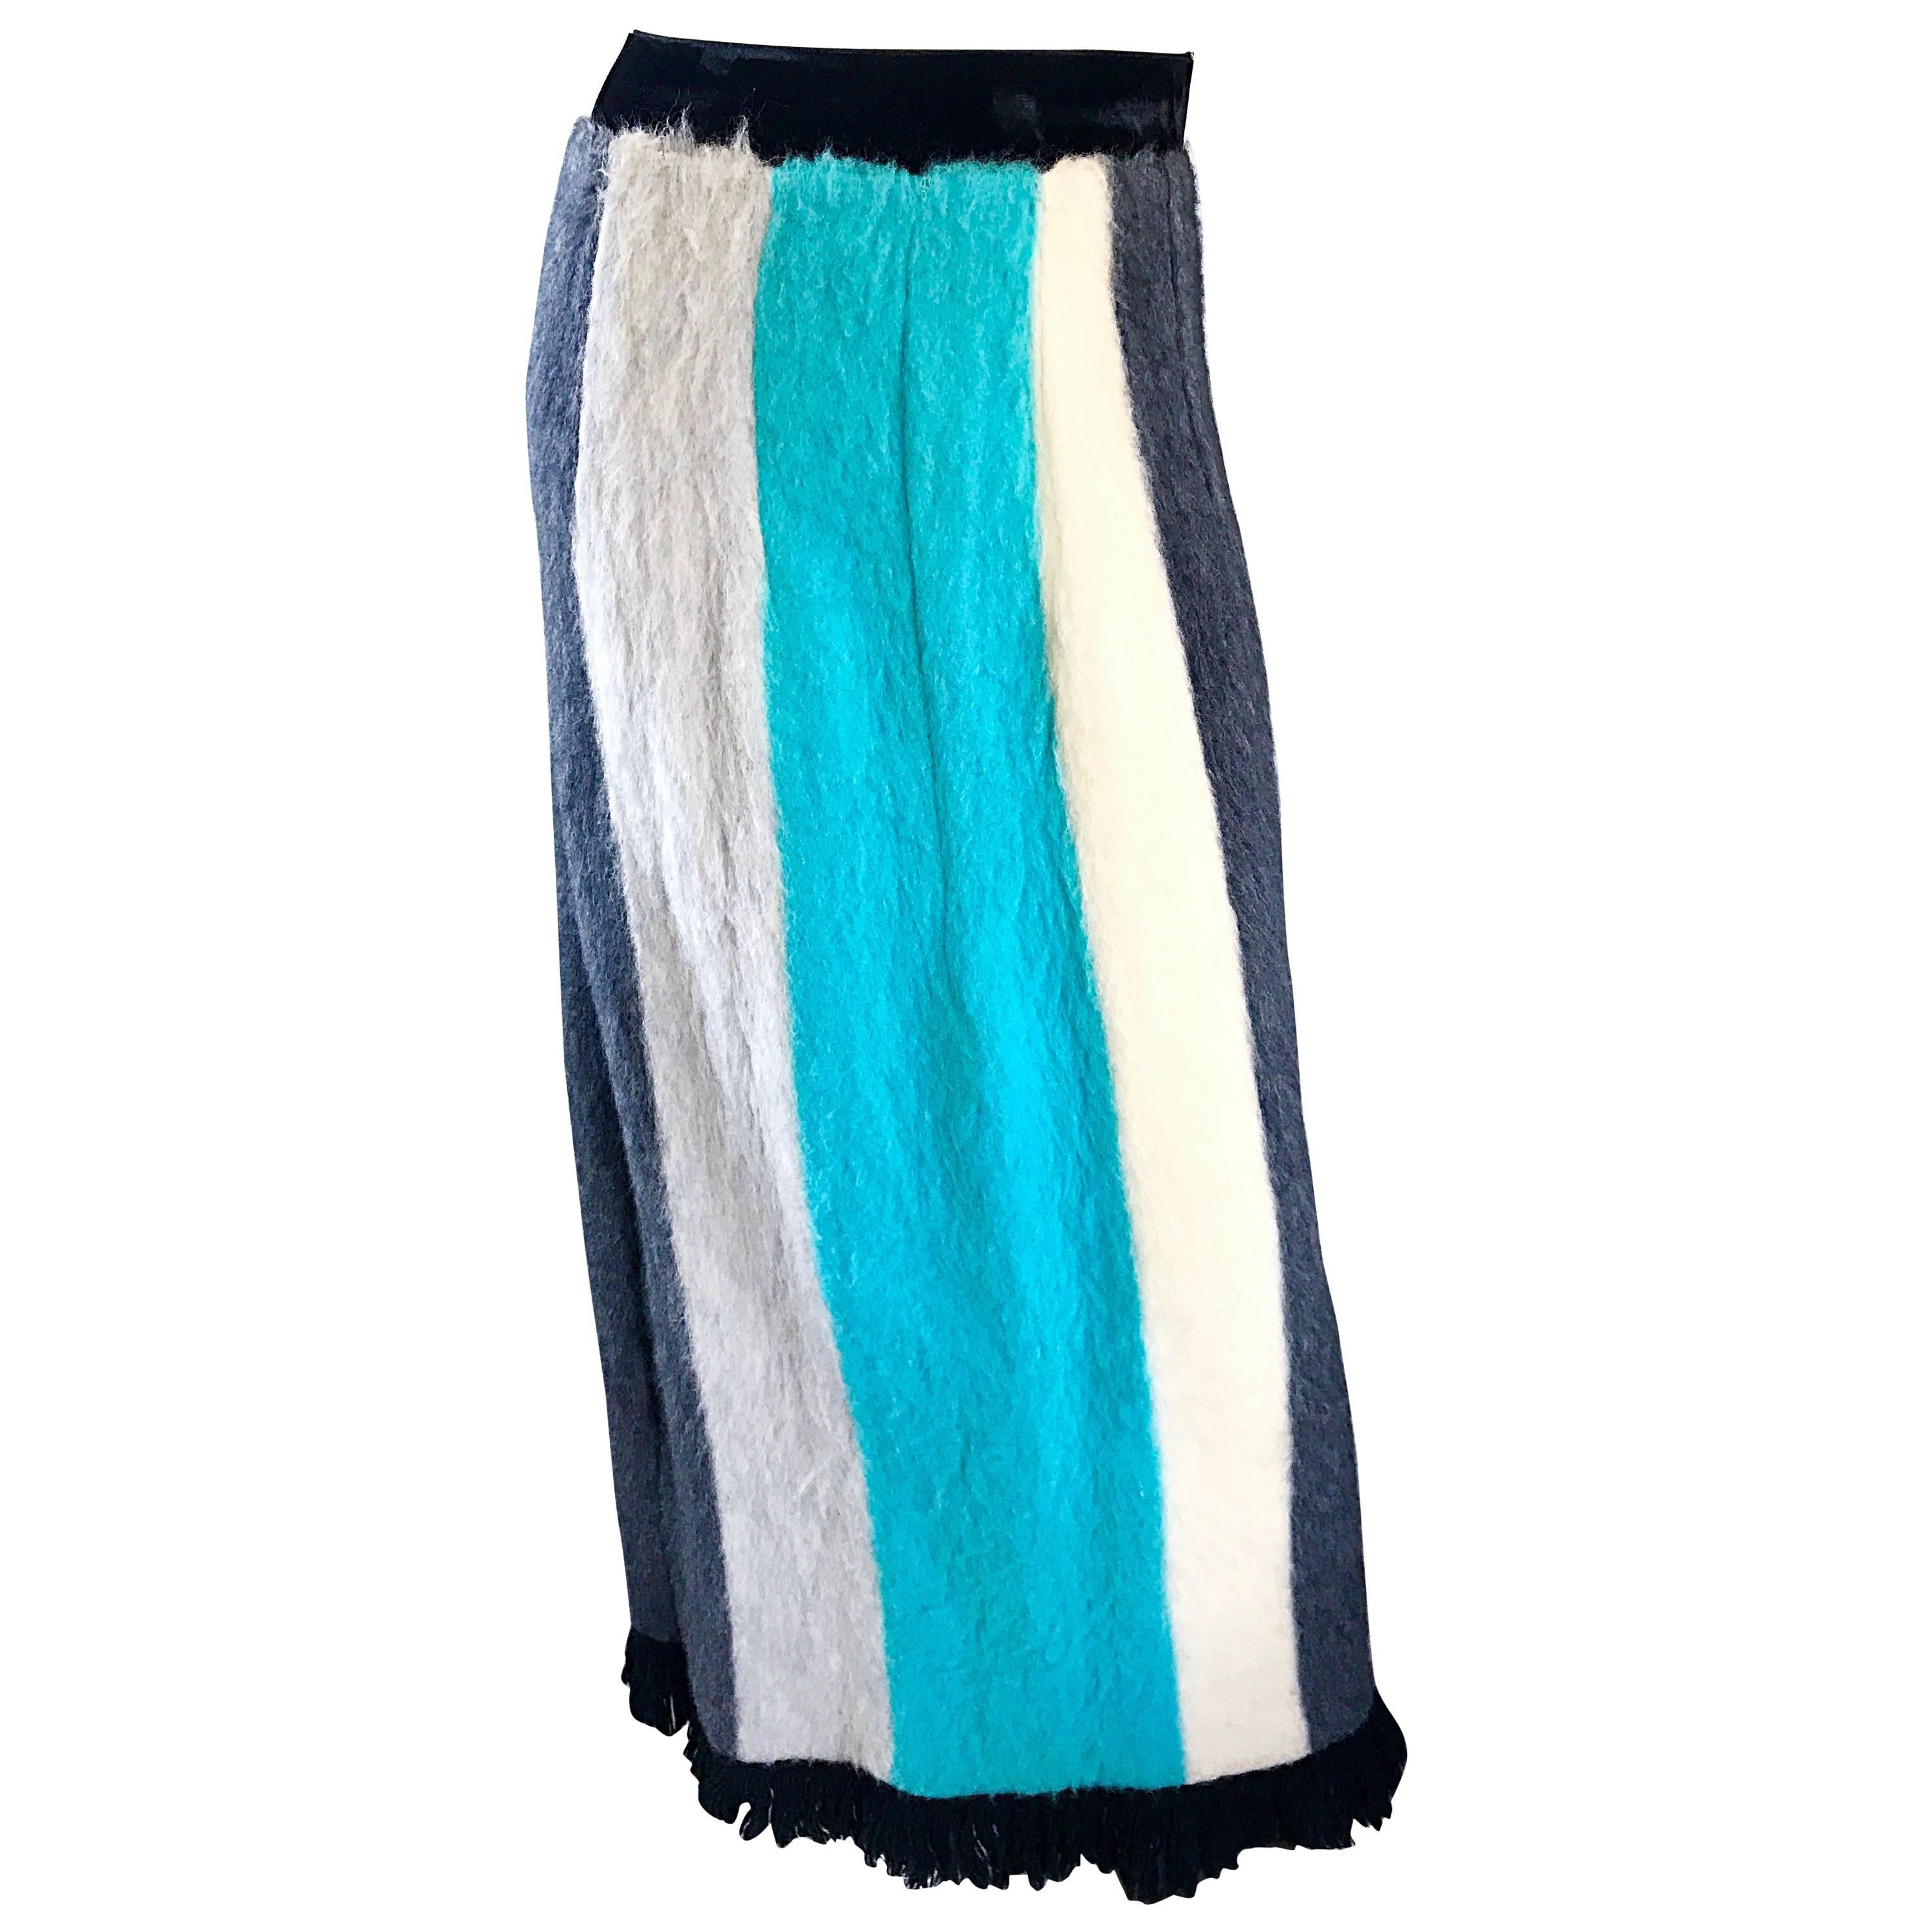 1960s French Made Teal Blue Gray Ivory Color Block Fringe Vintage Maxi Skirt